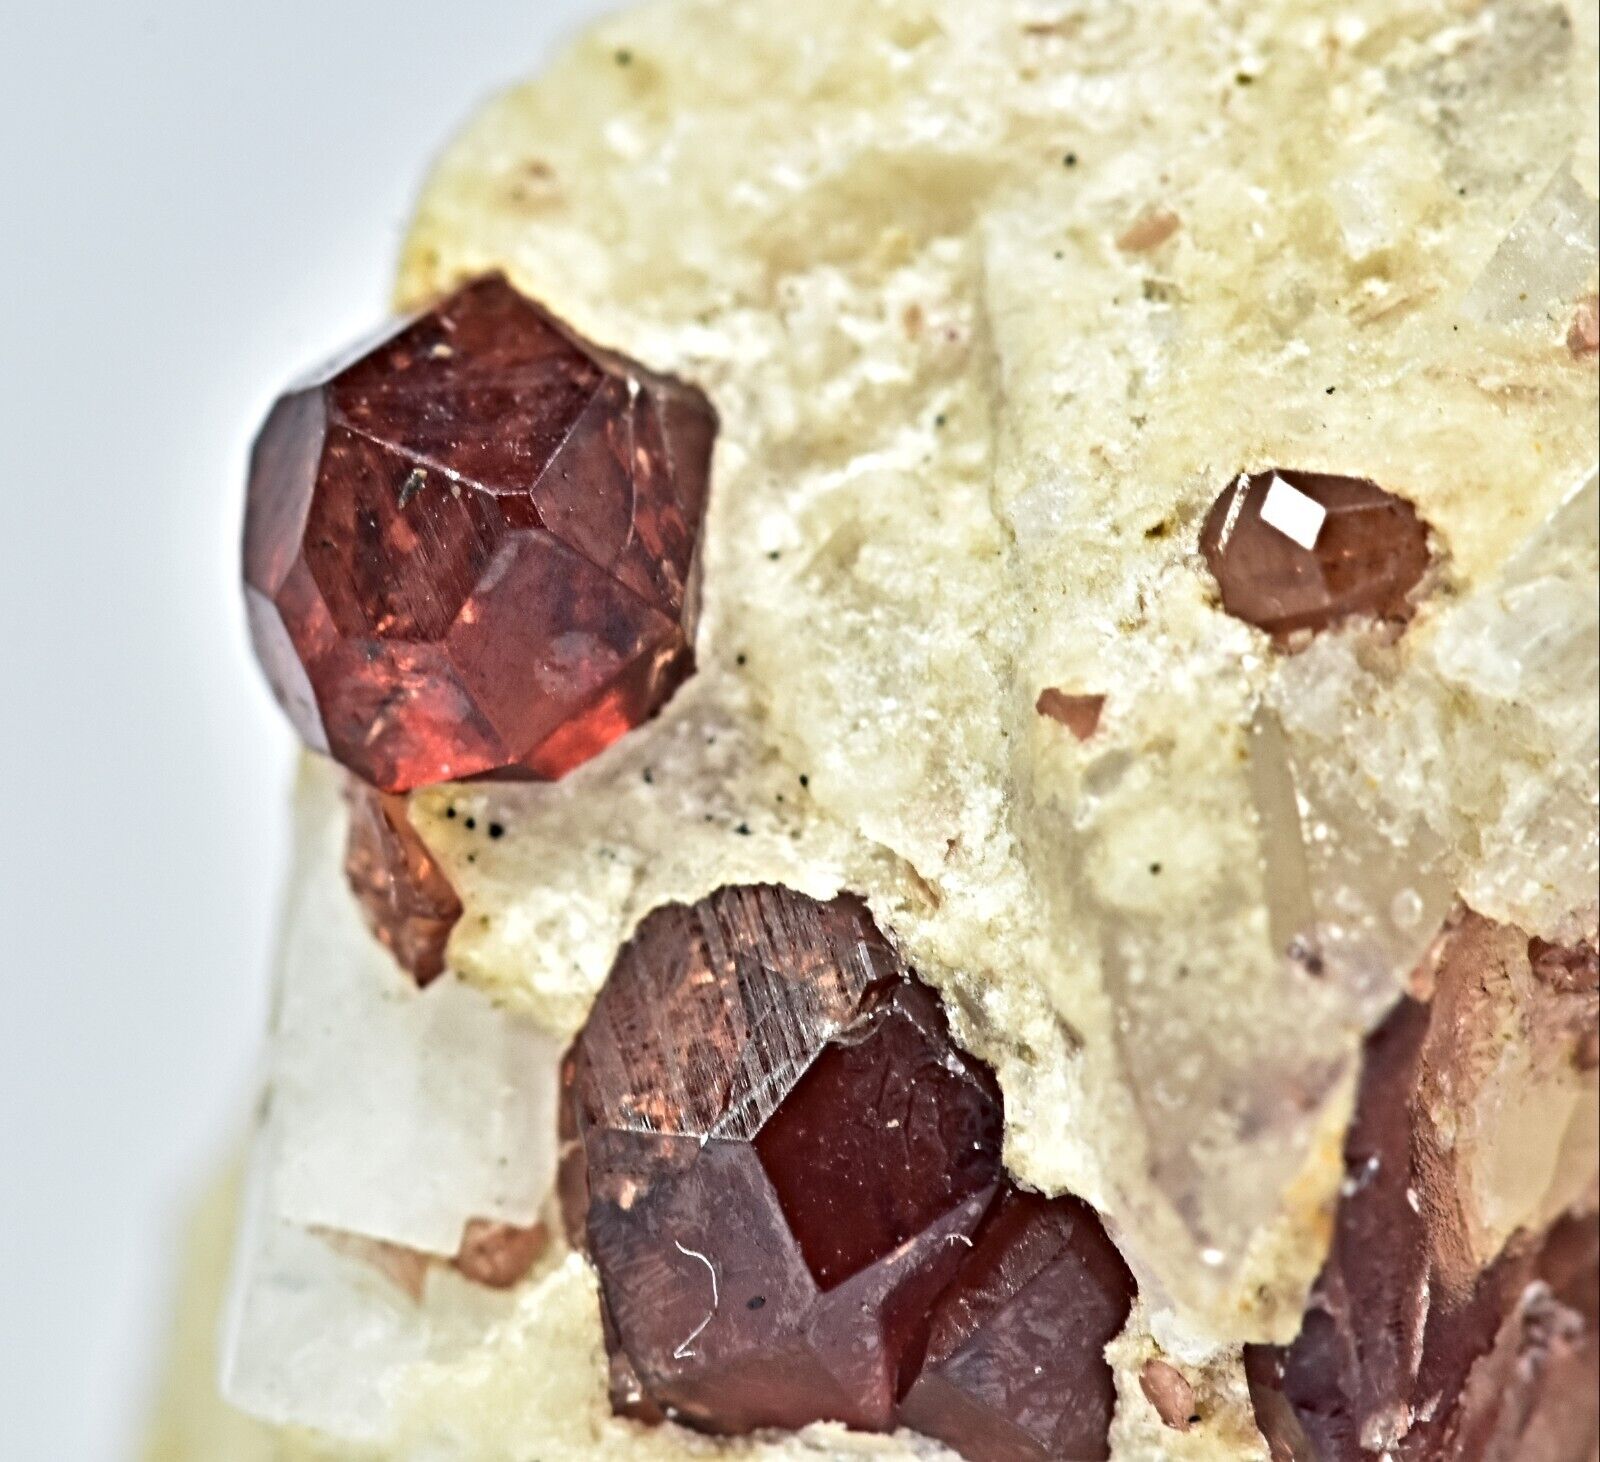 63 Carat Top Quality Terminated Garnet Crystal Specimen